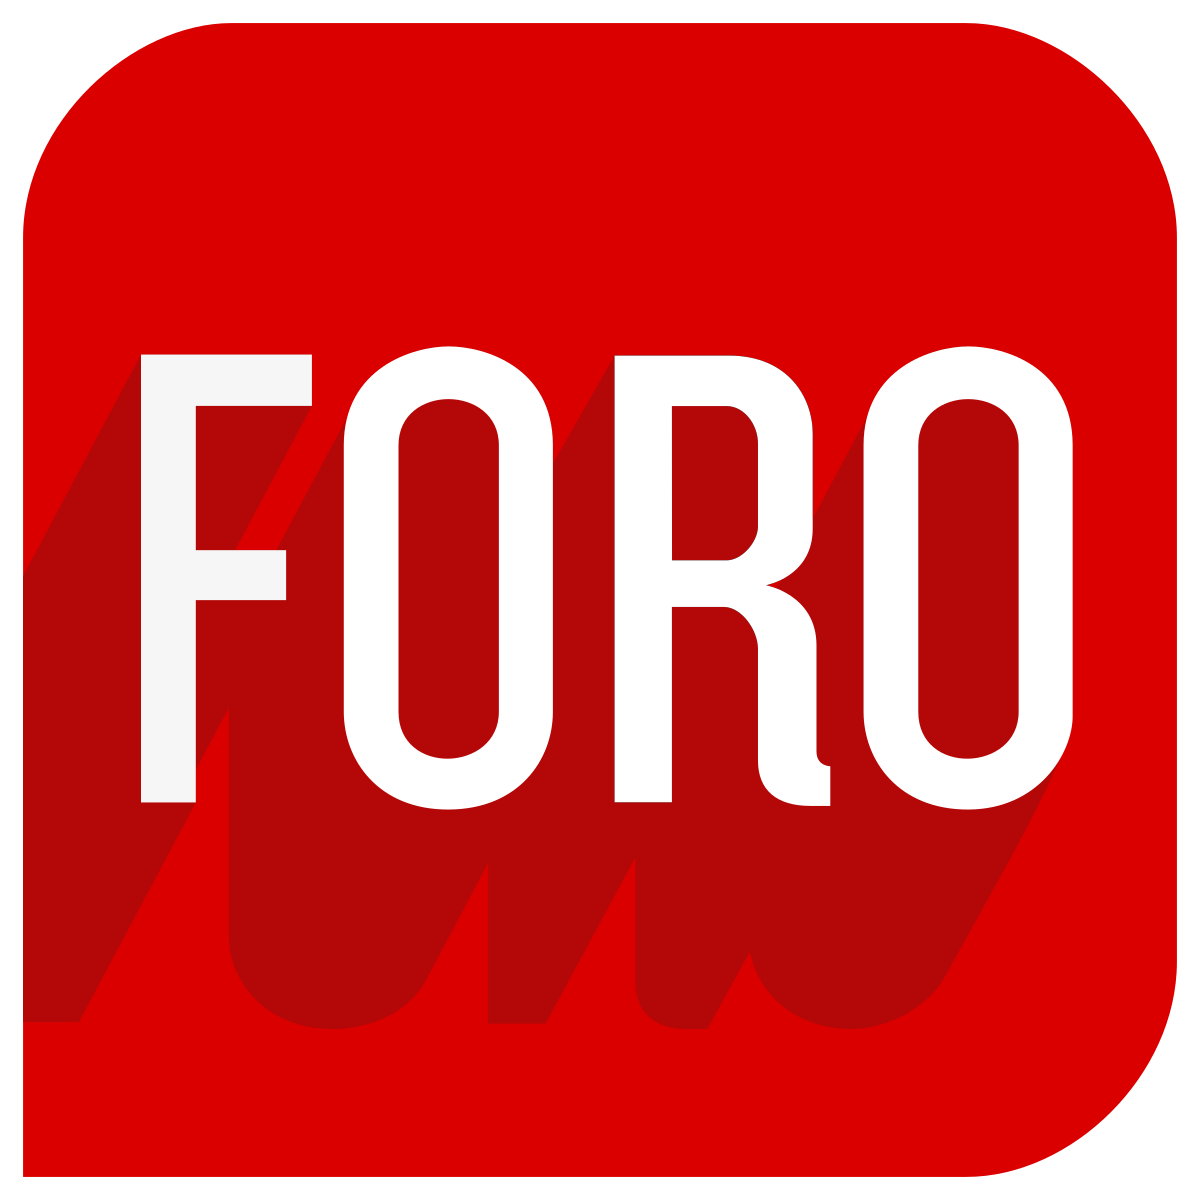 Logo de FOX Sports